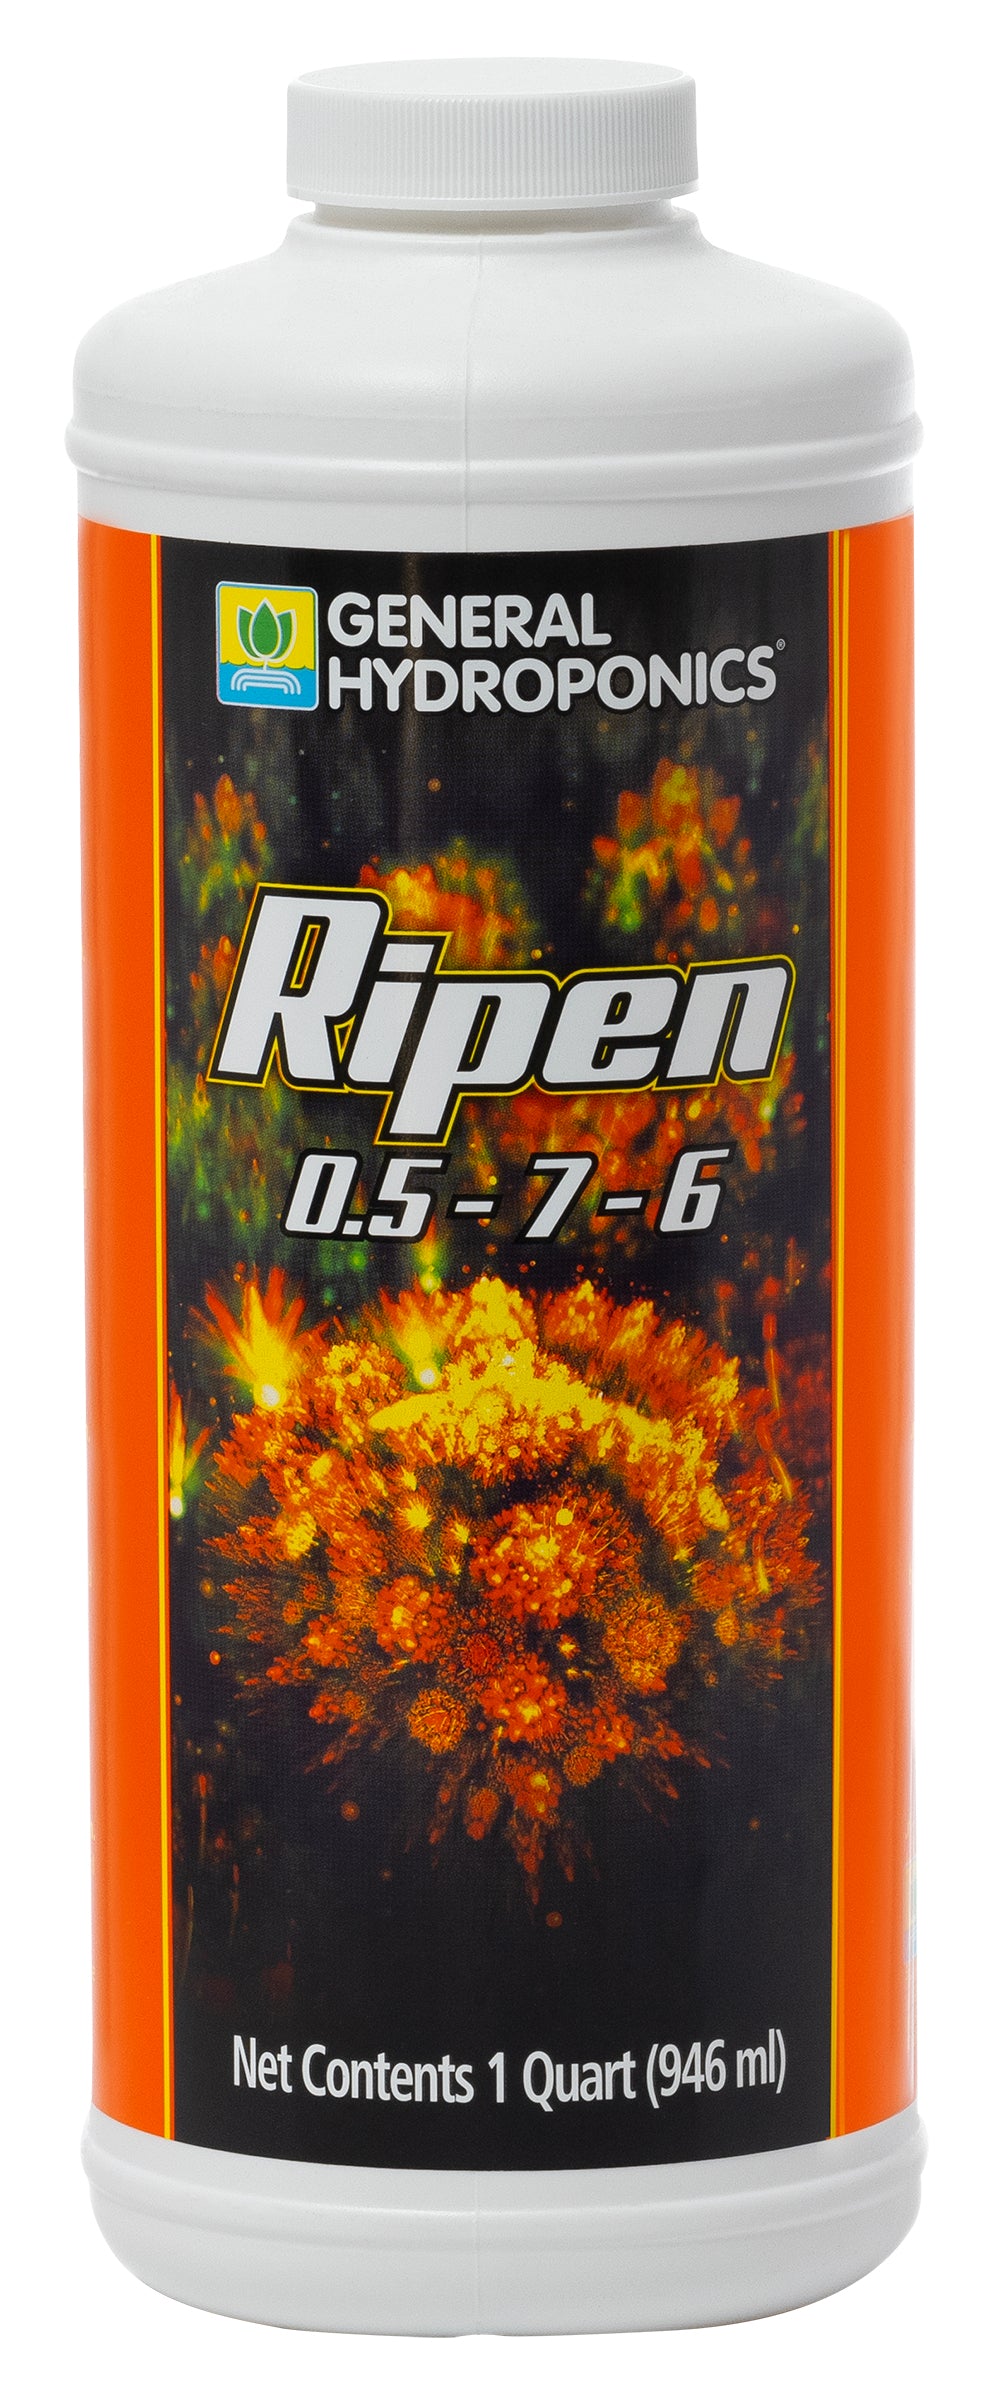 General Hydroponics® Ripen® 0.5 - 7 - 6